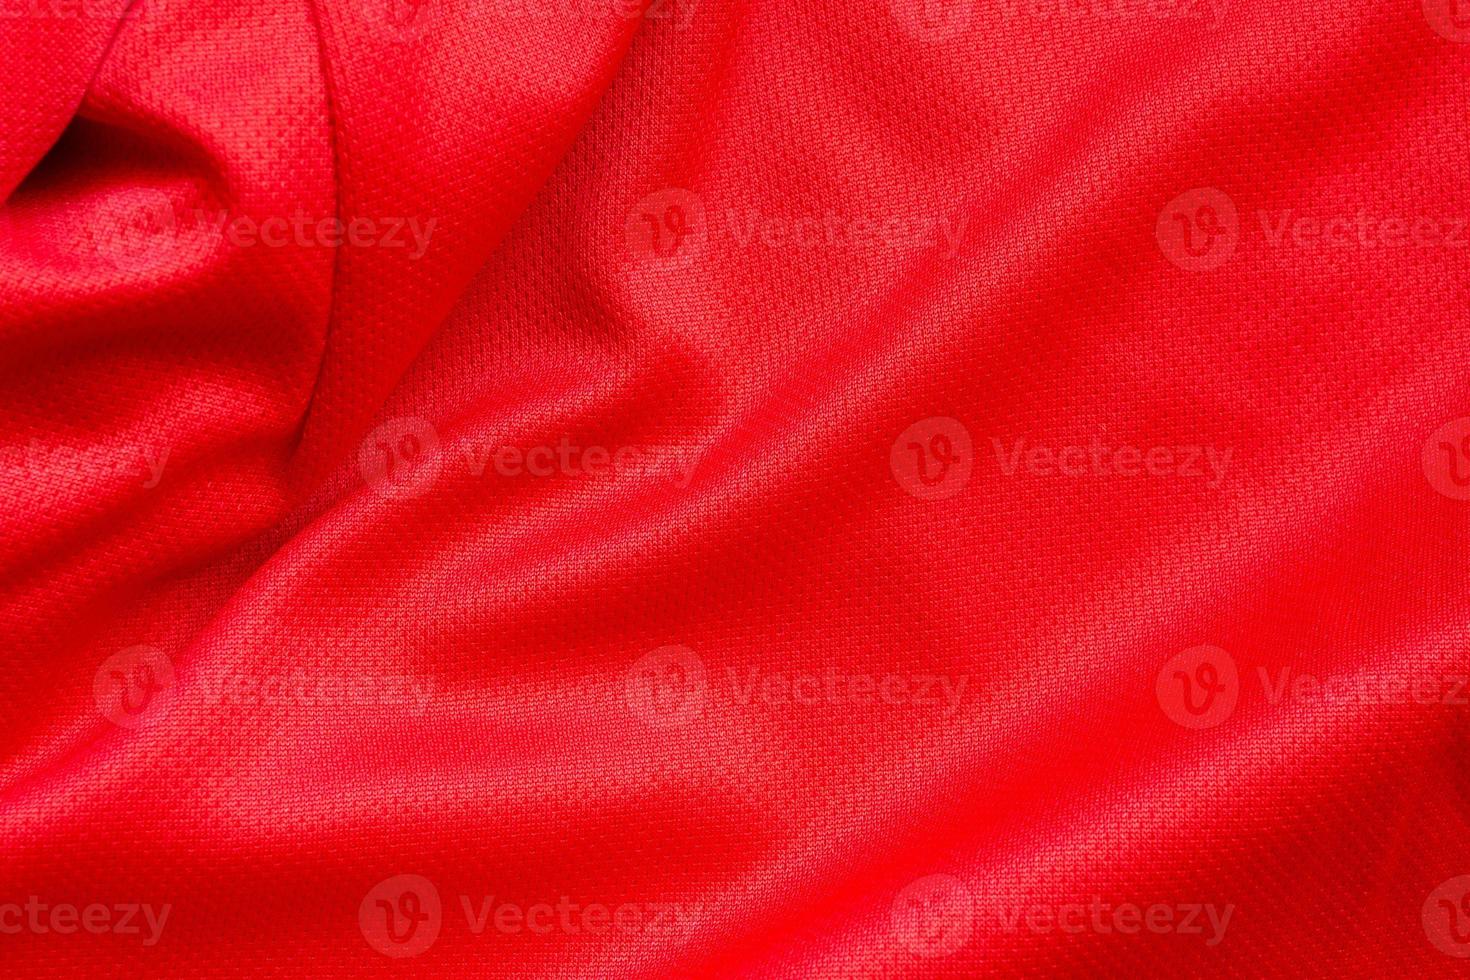 rood sport- kleding kleding stof Amerikaans voetbal overhemd Jersey structuur achtergrond foto